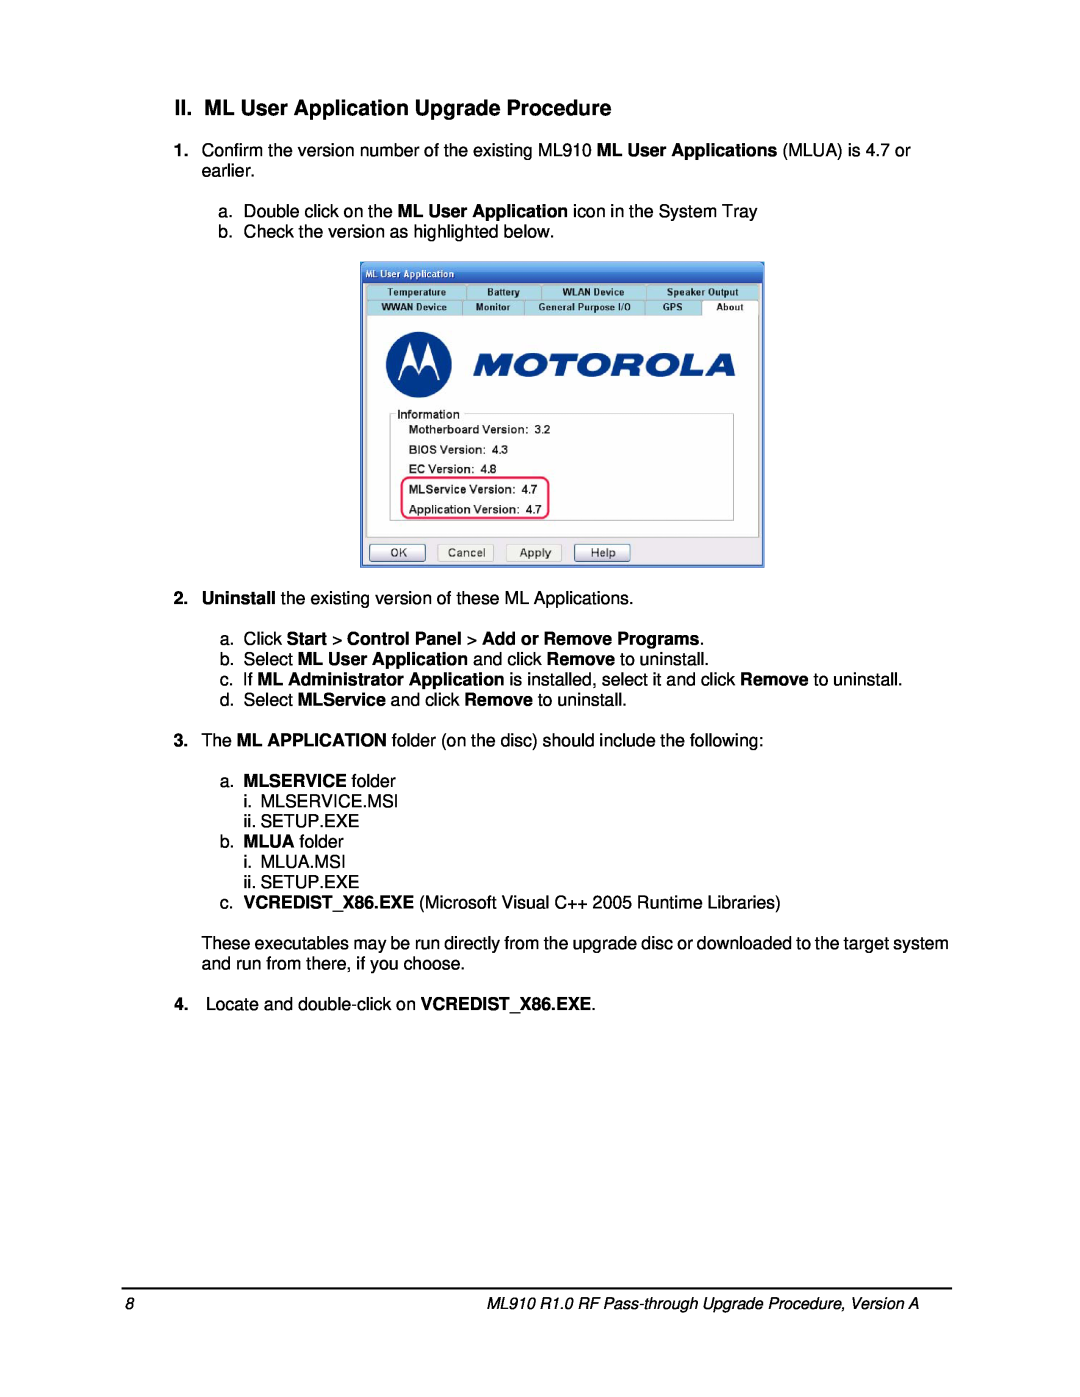 Motorola ML910TM manual II. ML User Application Upgrade Procedure, a. Click Start Control Panel Add or Remove Programs 